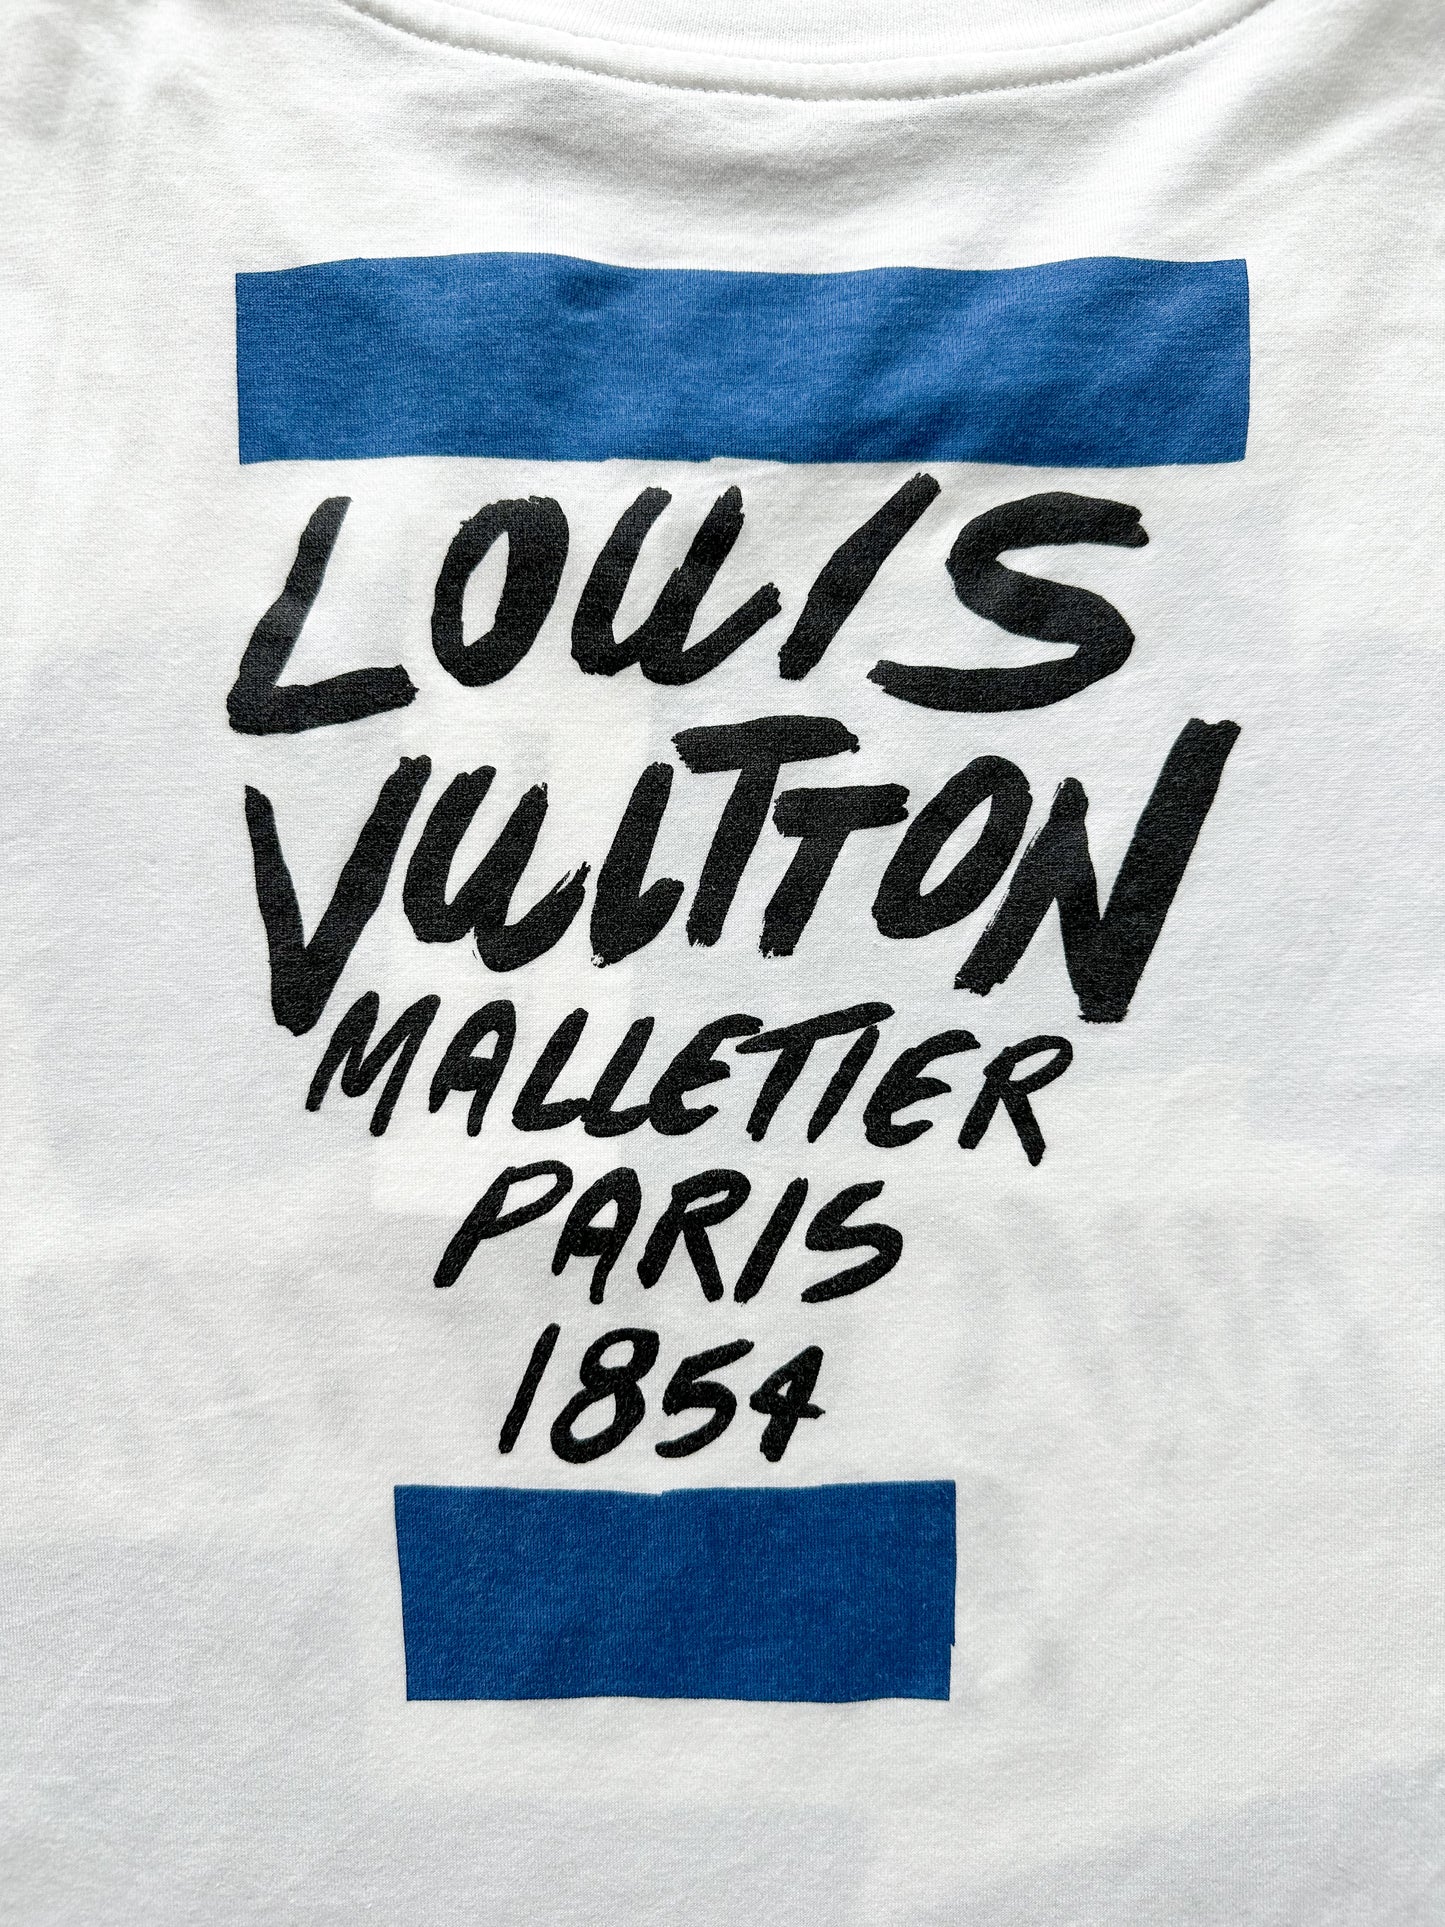 LOUIS VUITTON MALLETIER PARIS 1854 WHITE SHIRT, Luxury, Apparel on Carousell